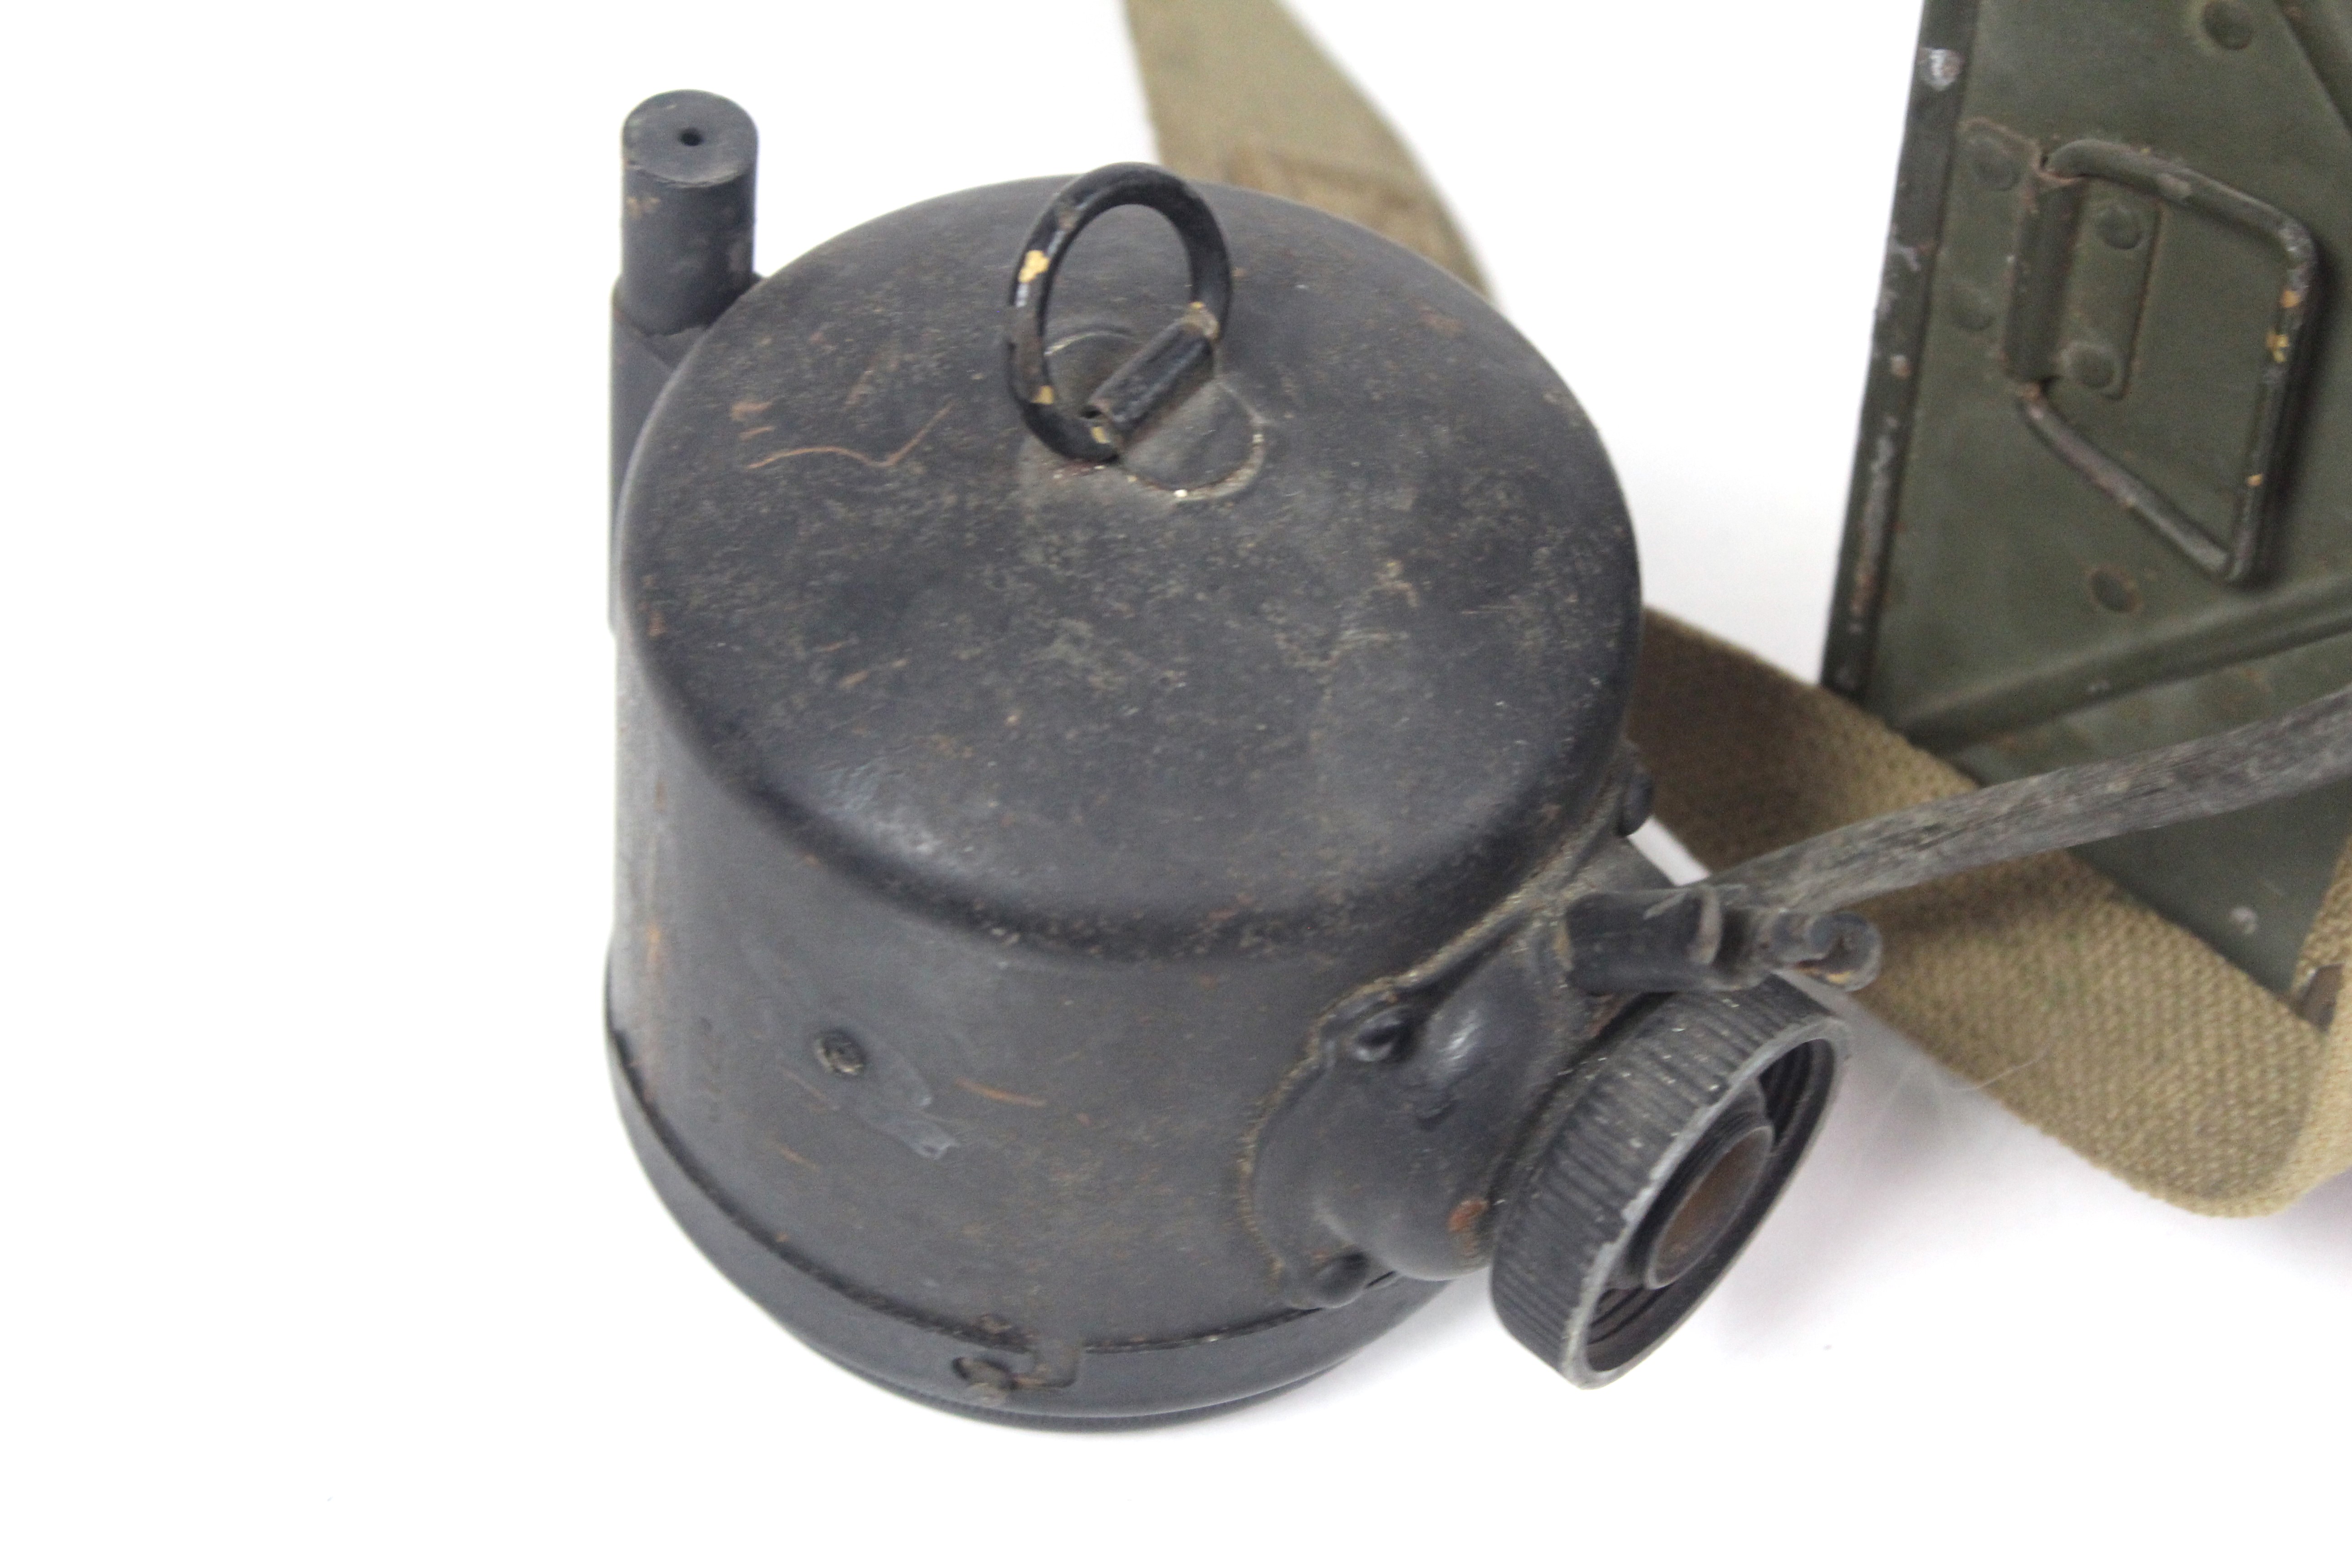 A British WWII era signalling lamp with Morse key - Image 4 of 6